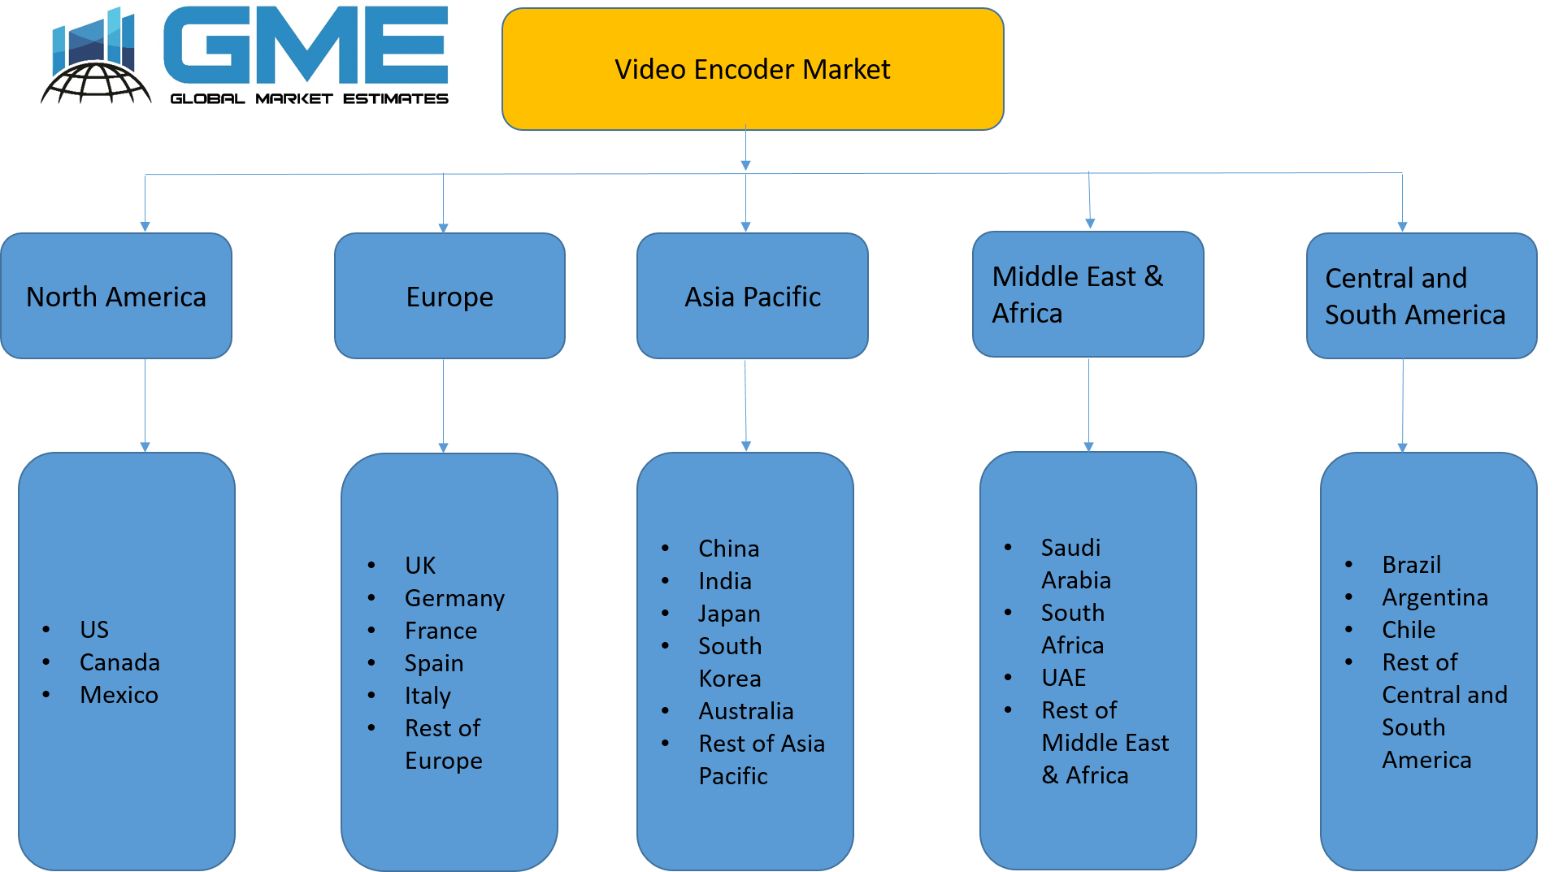 Video Encoder Market - Regional Analysis